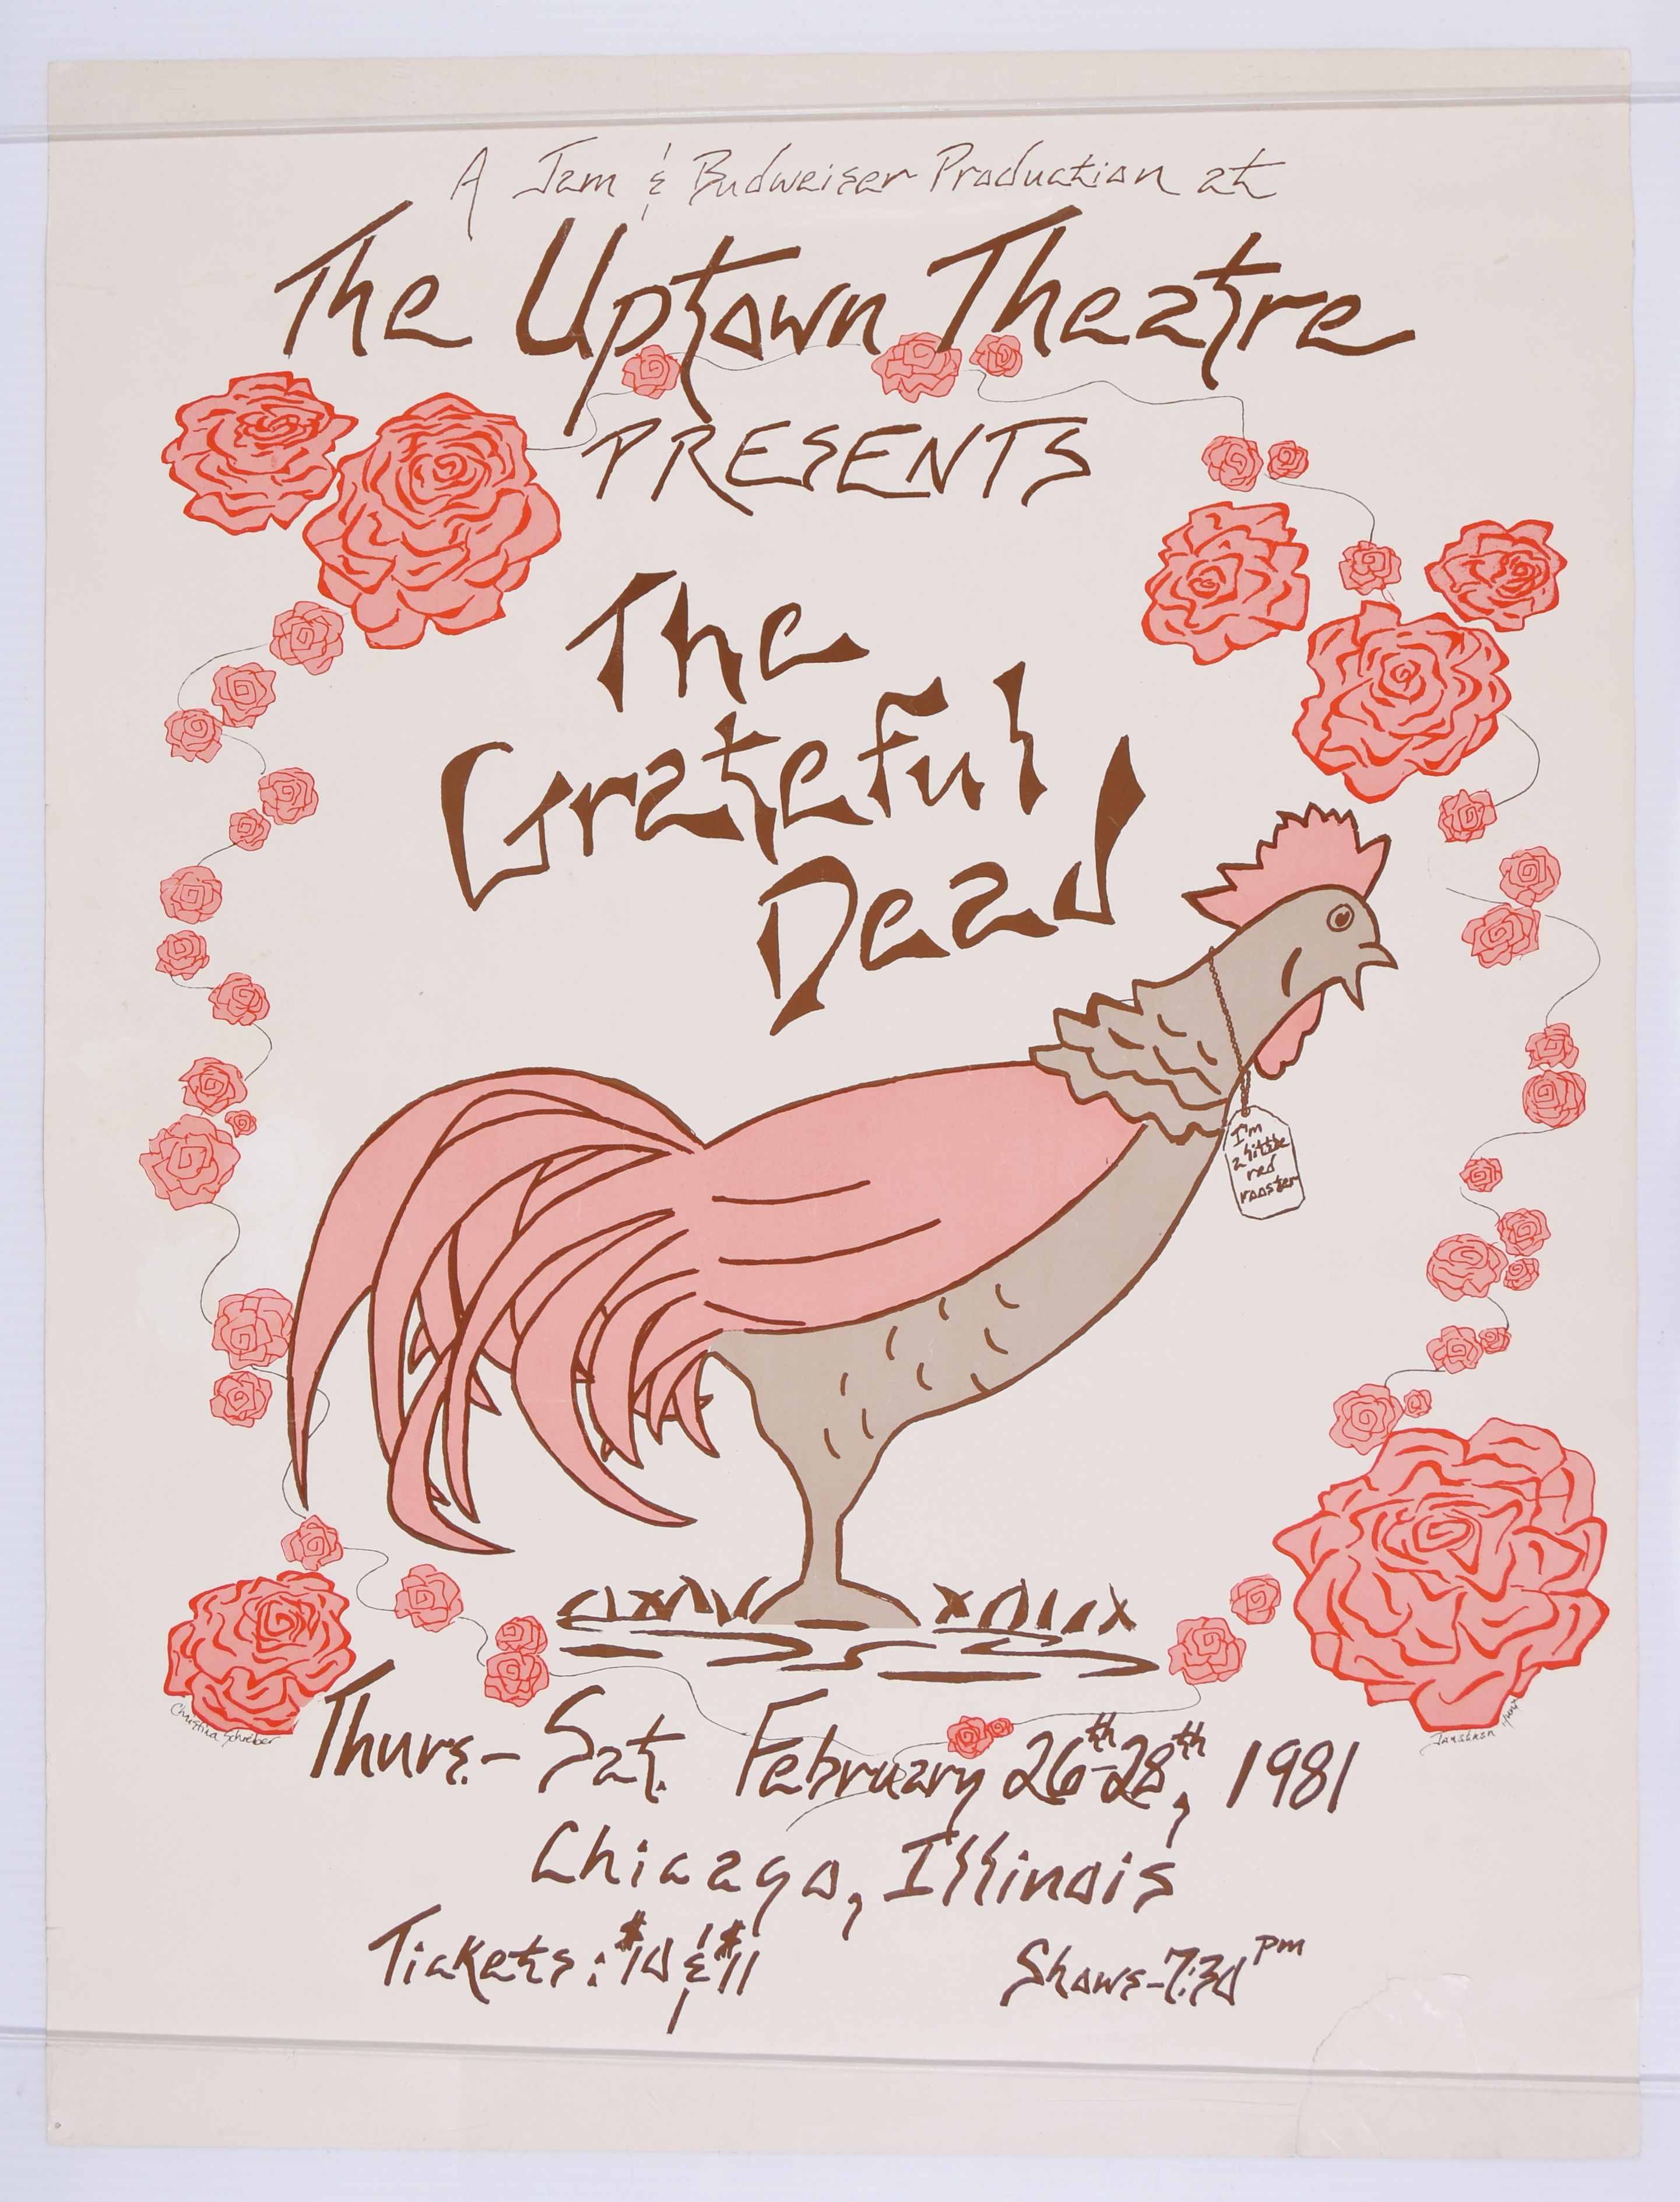 Grateful Dead Uptown Theatre 1981 Concert Poster